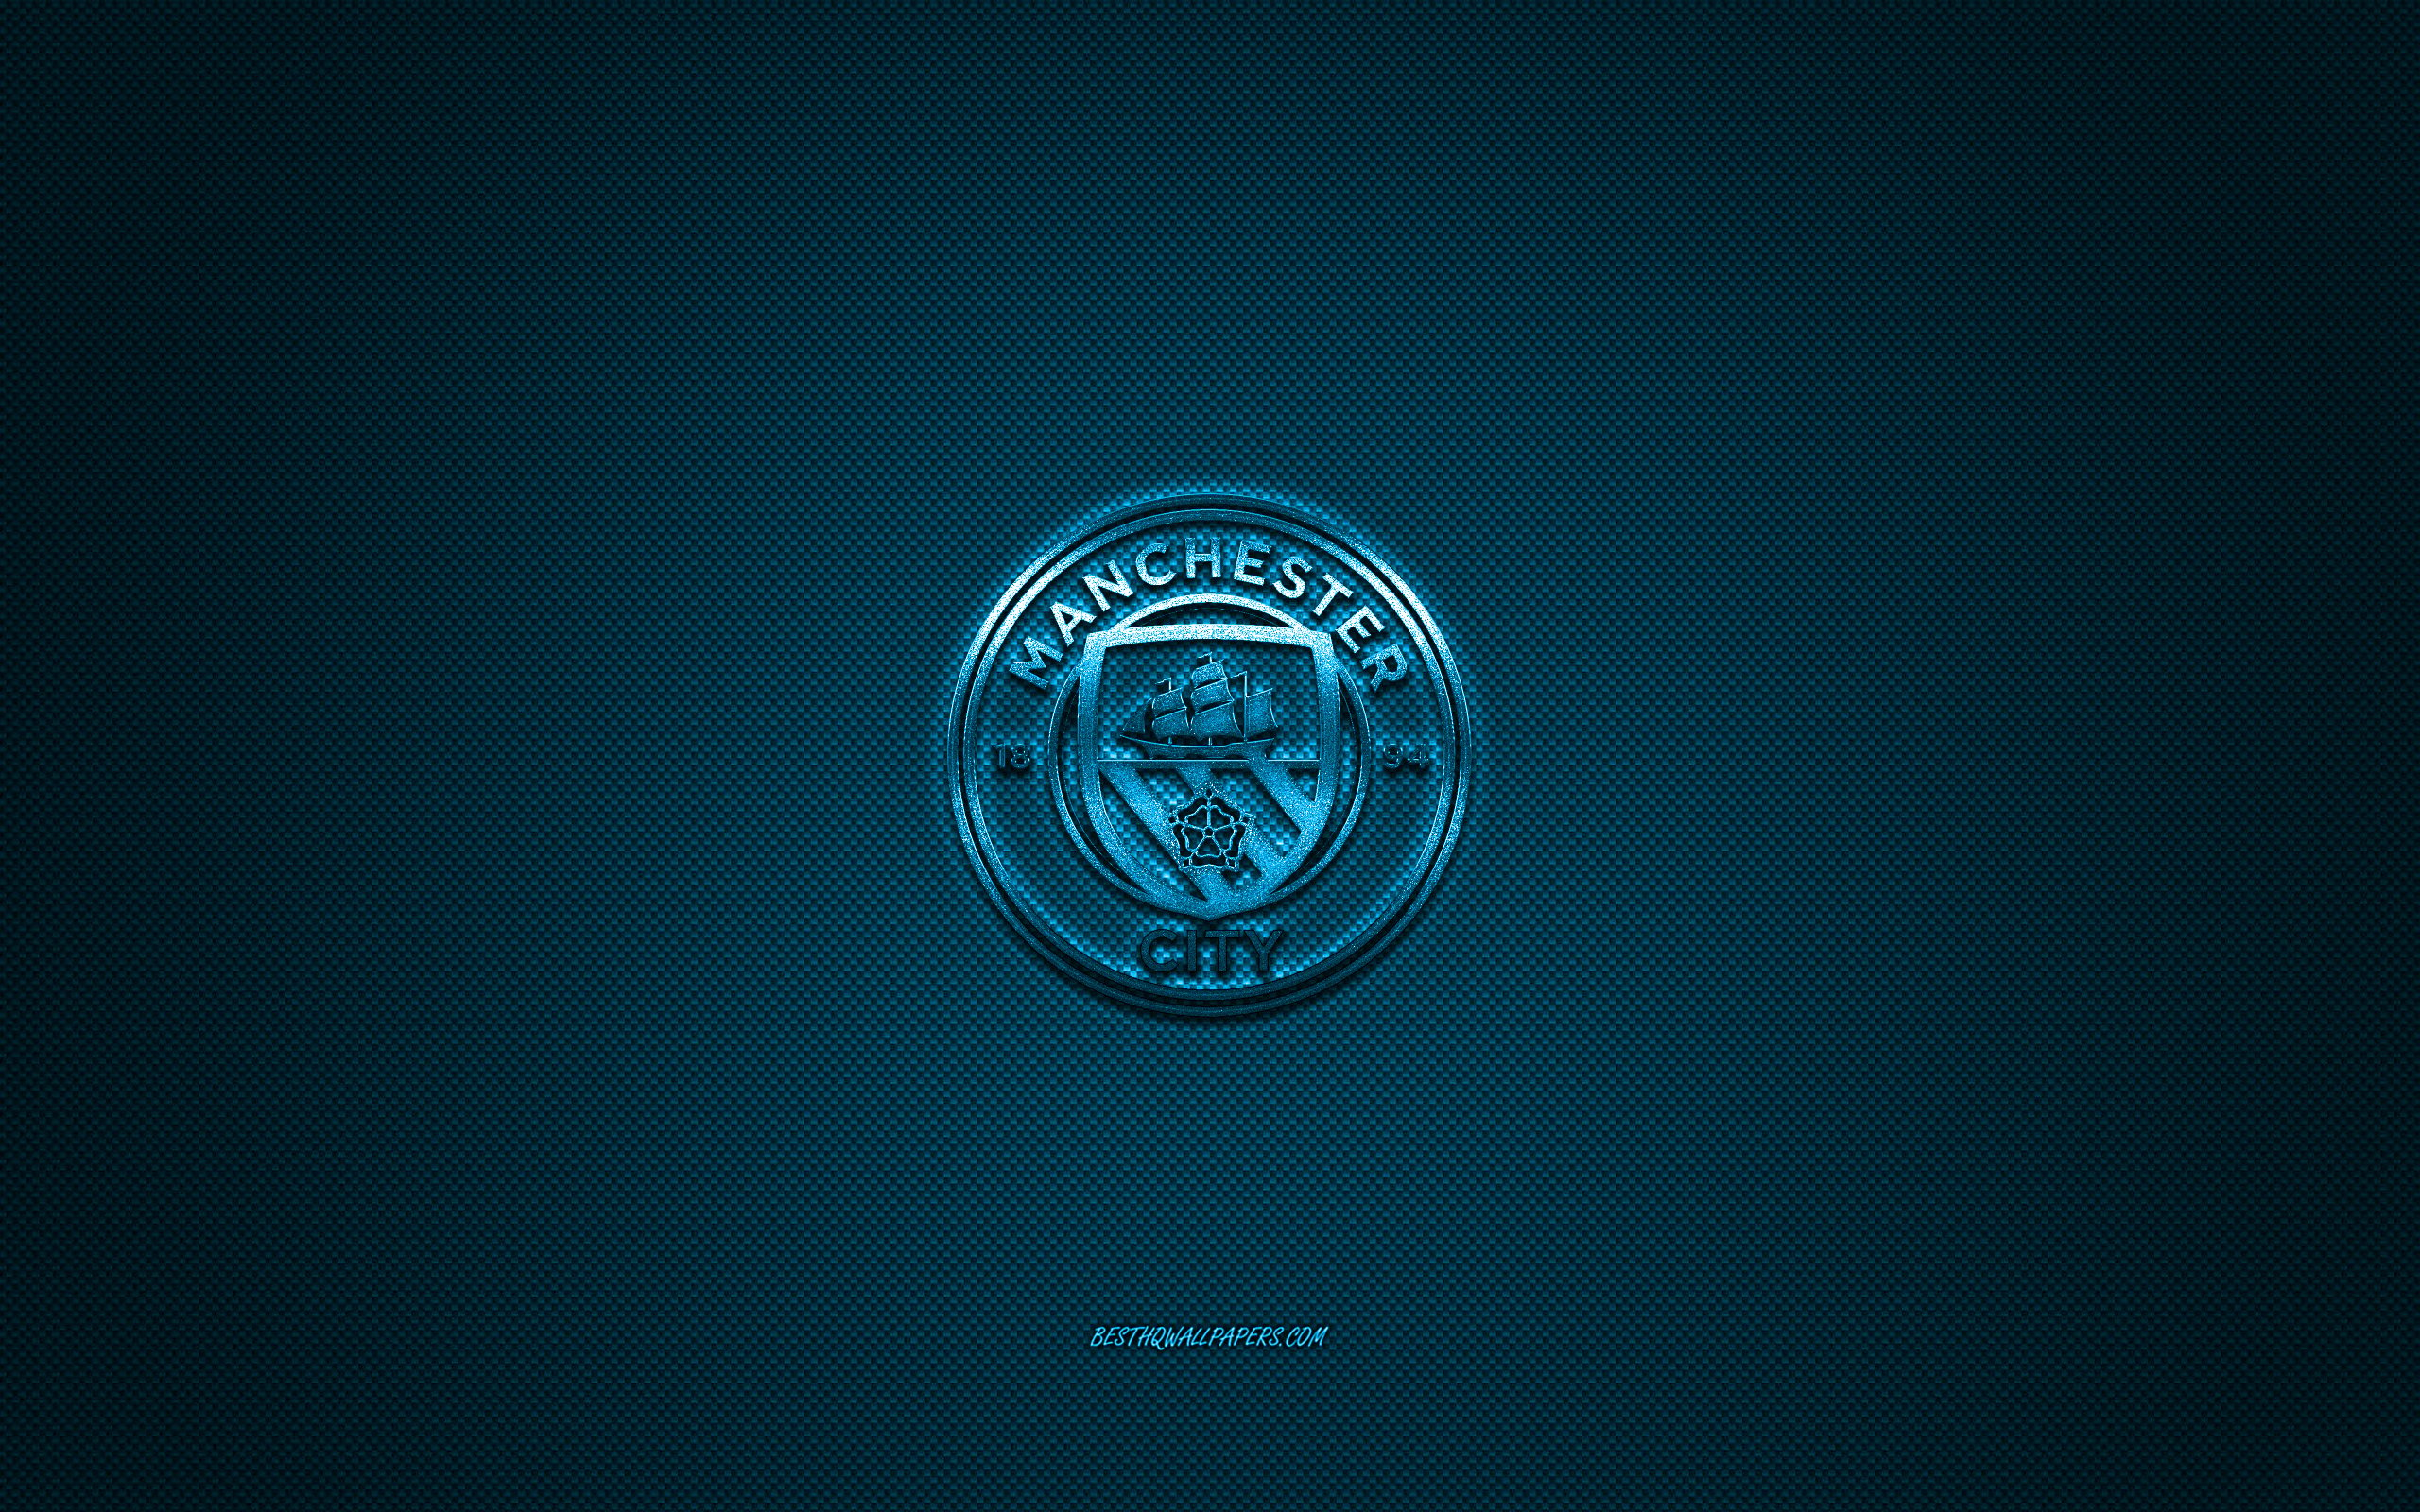 Download wallpaper Manchester City FC, English football